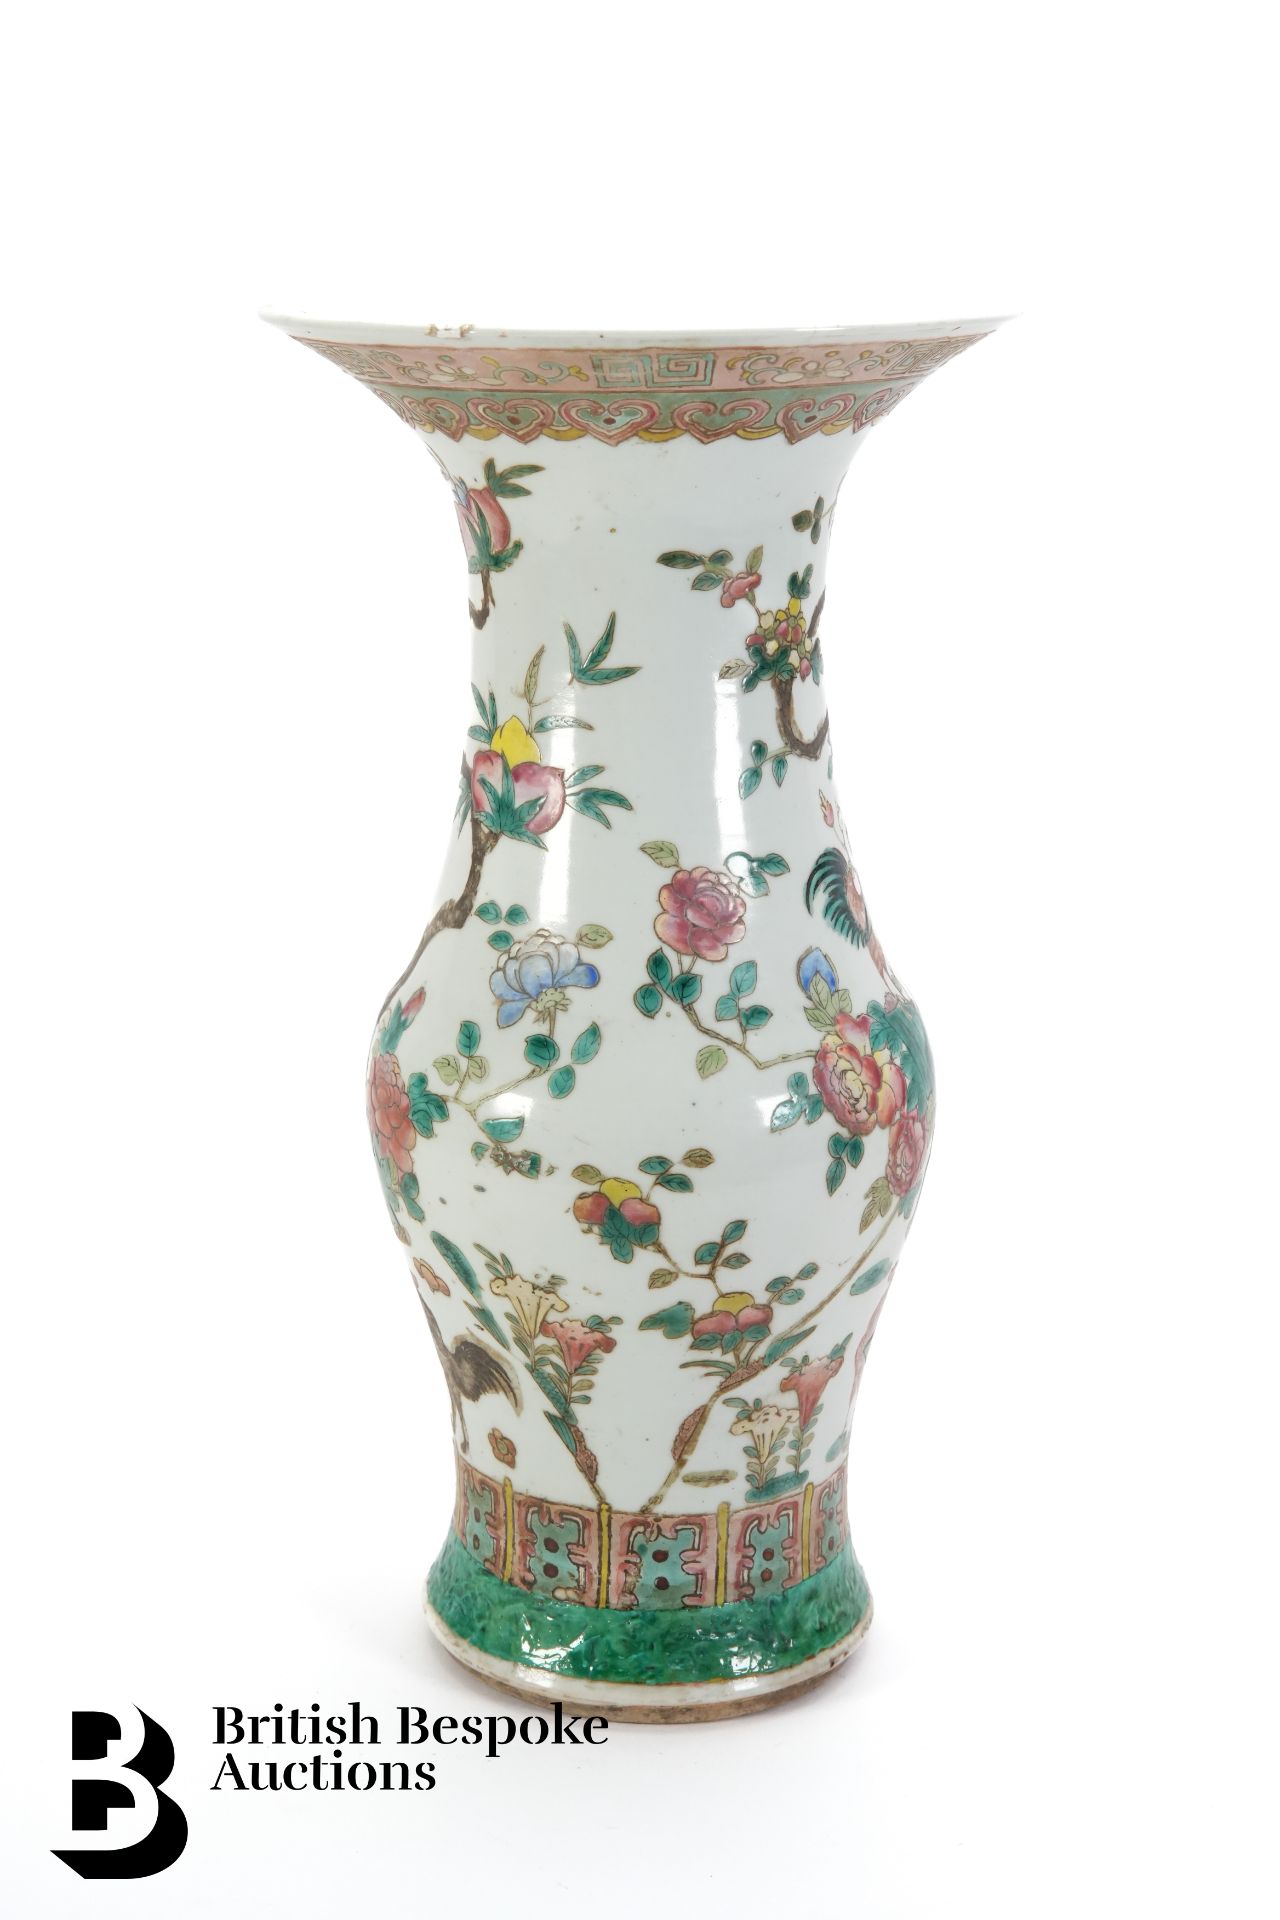 Chinese Qing Dynasty Porcelain Vase